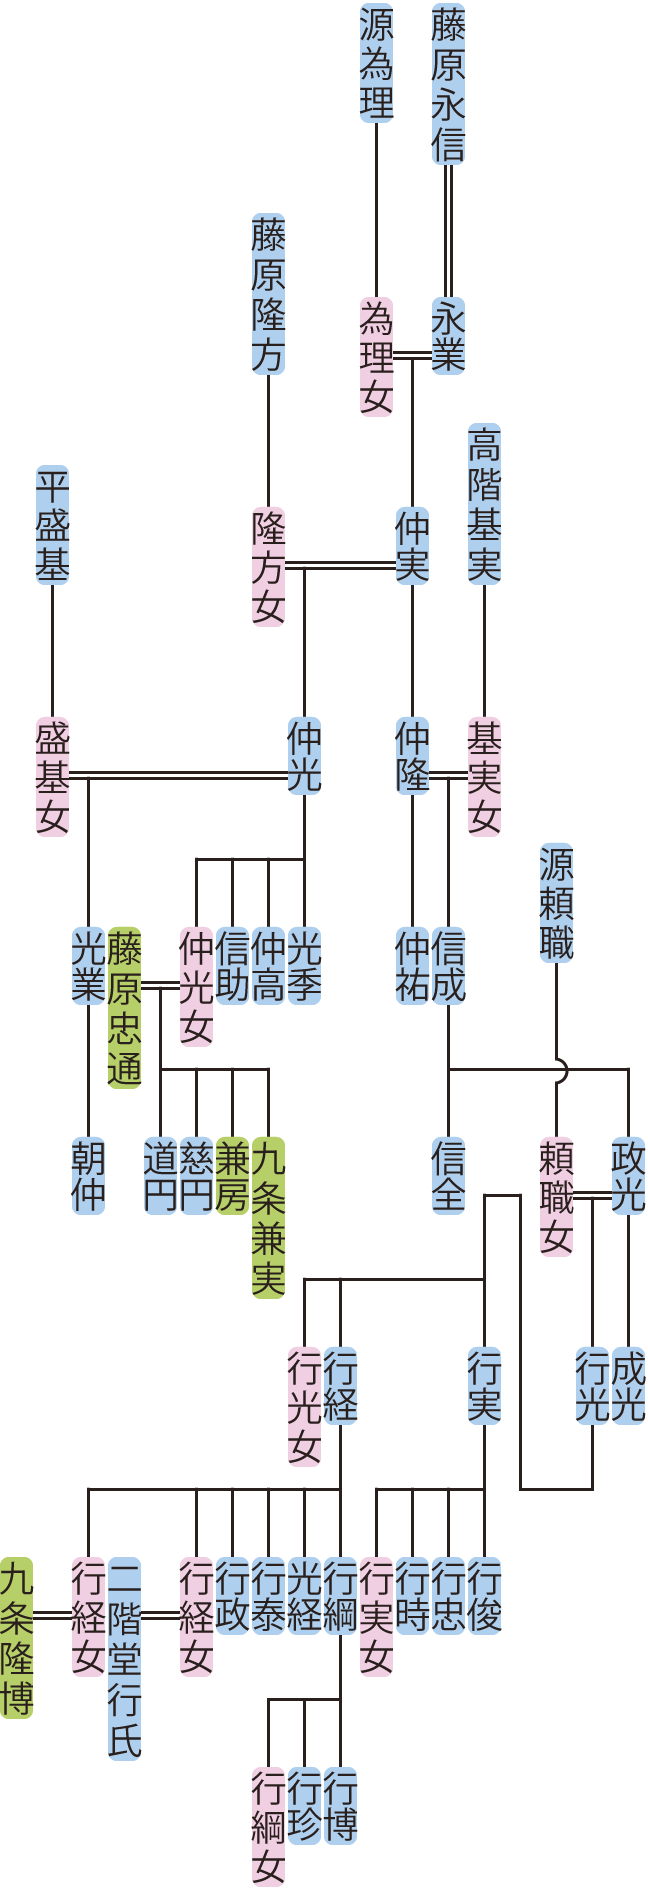 藤原仲実の系図